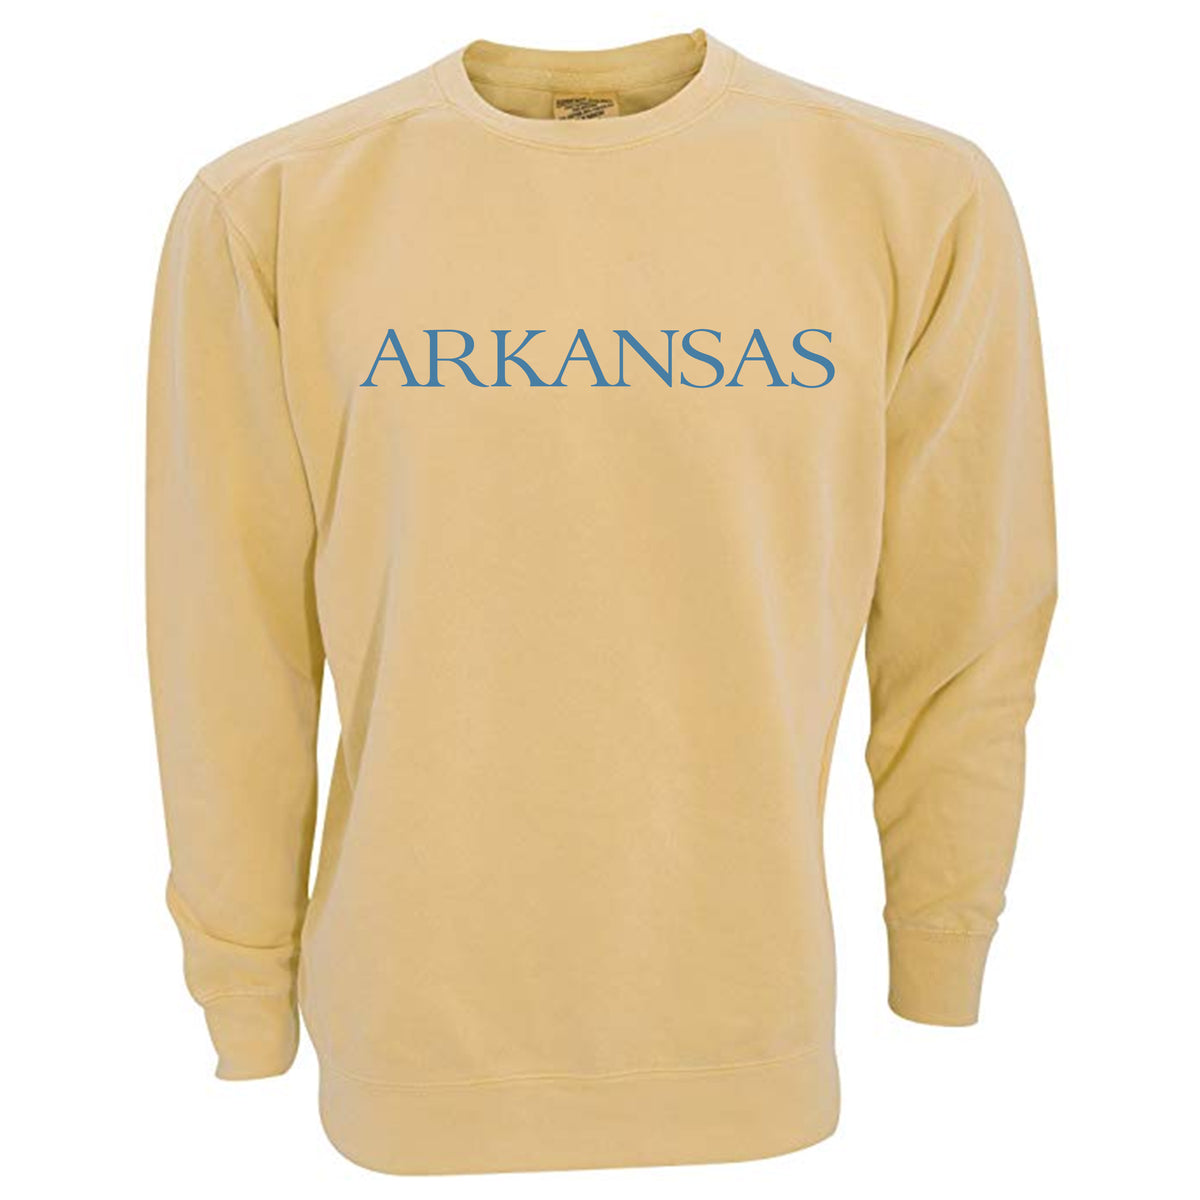 By the sea Arkansas Yellow Sweatshirt